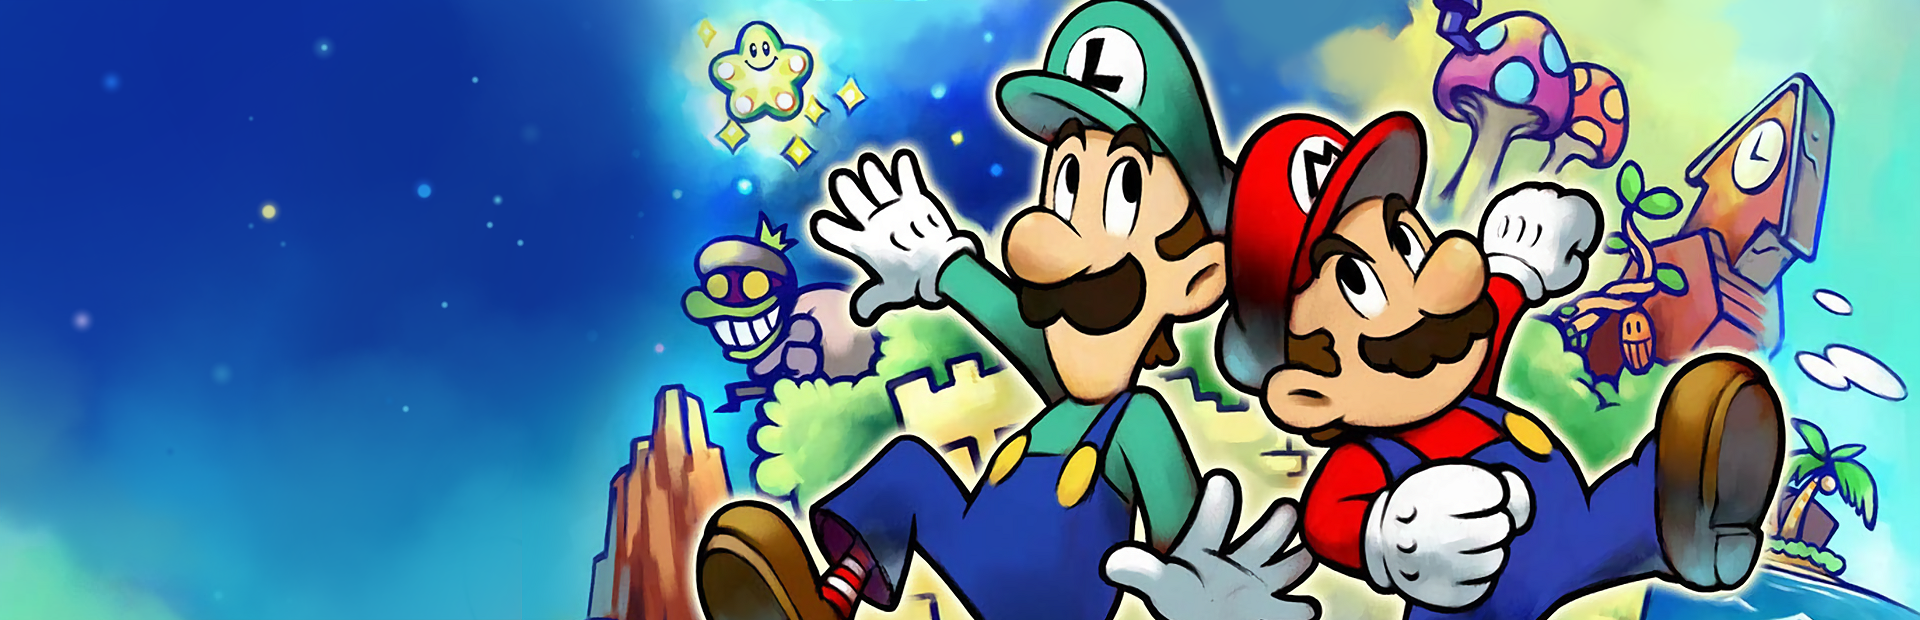 Mario and luigi saga. Марио и Луиджи: сага о суперзвездах. Марио и Луиджи. Суперзвезда Марио. Mario & Luigi: Superstar Saga Луиджи в платеье.